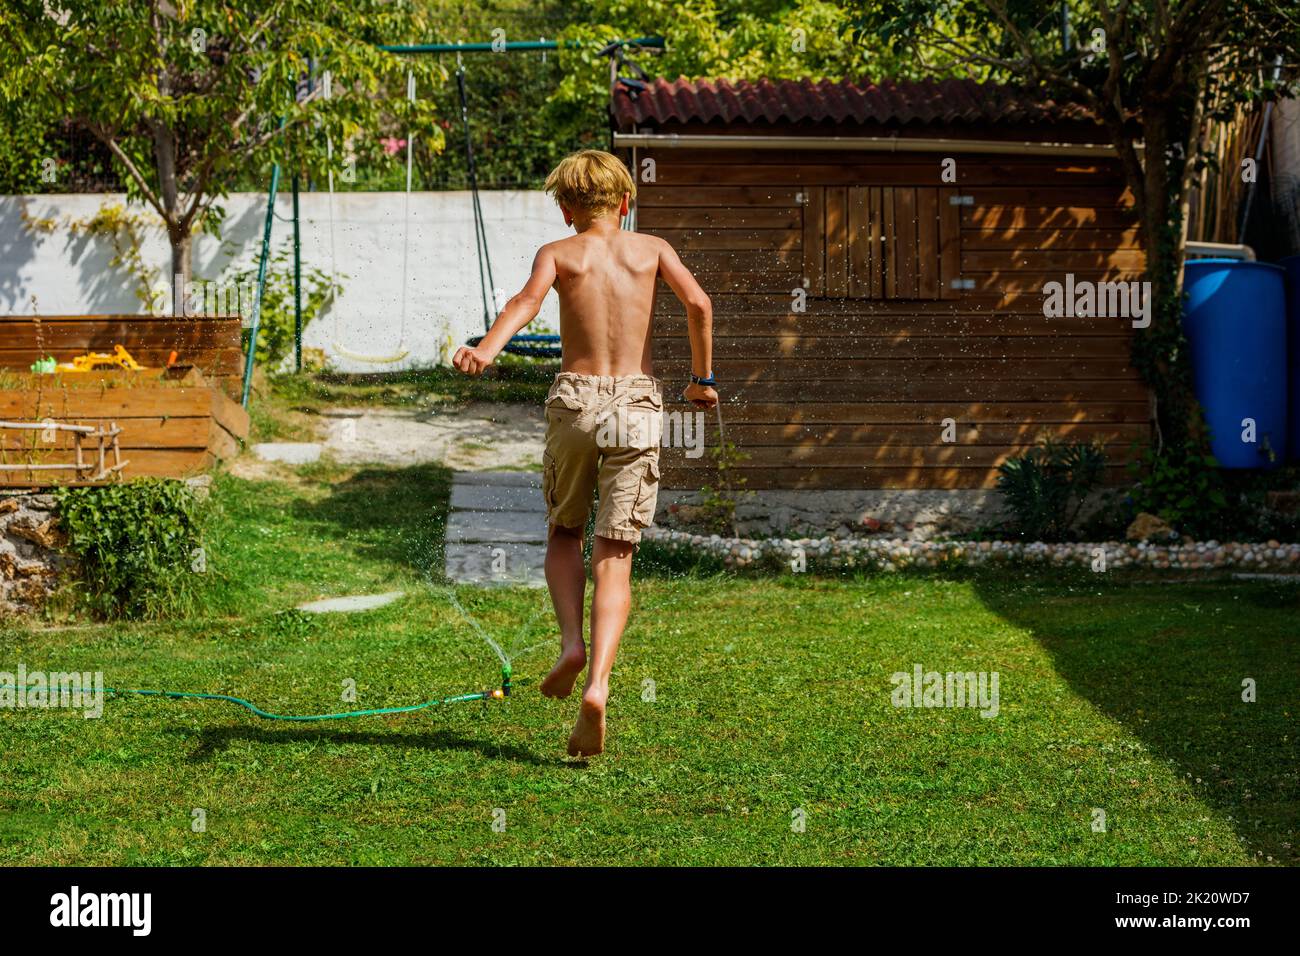 Boy play run around water sprinkler in the garden lawn back view Stock Photo